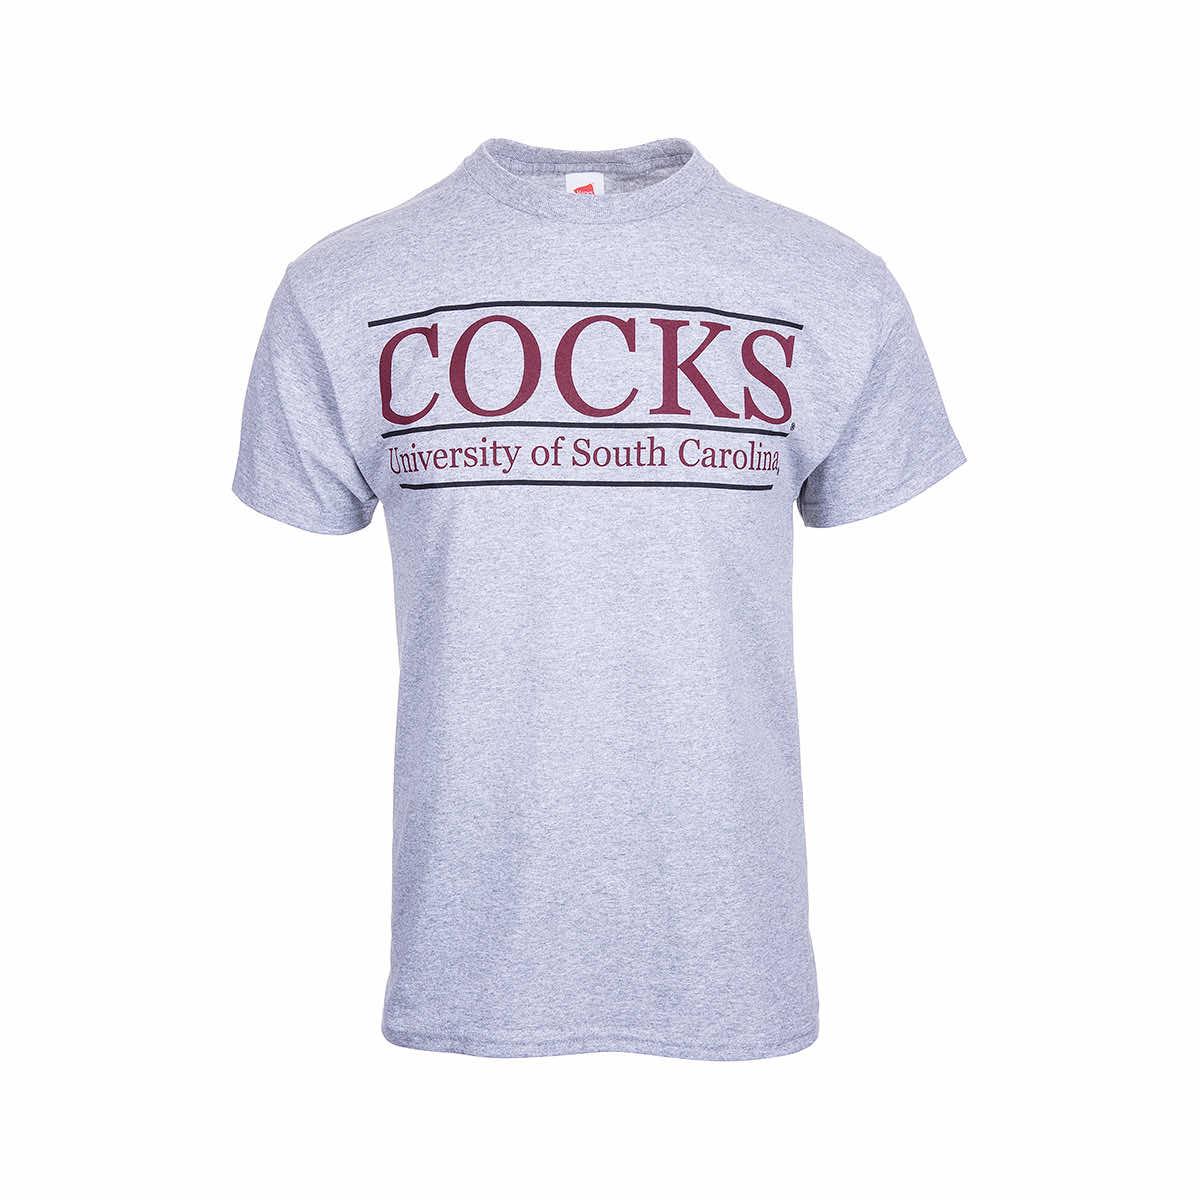 New World Graphics Clemson University Mountain Man's T-Shirt Tee